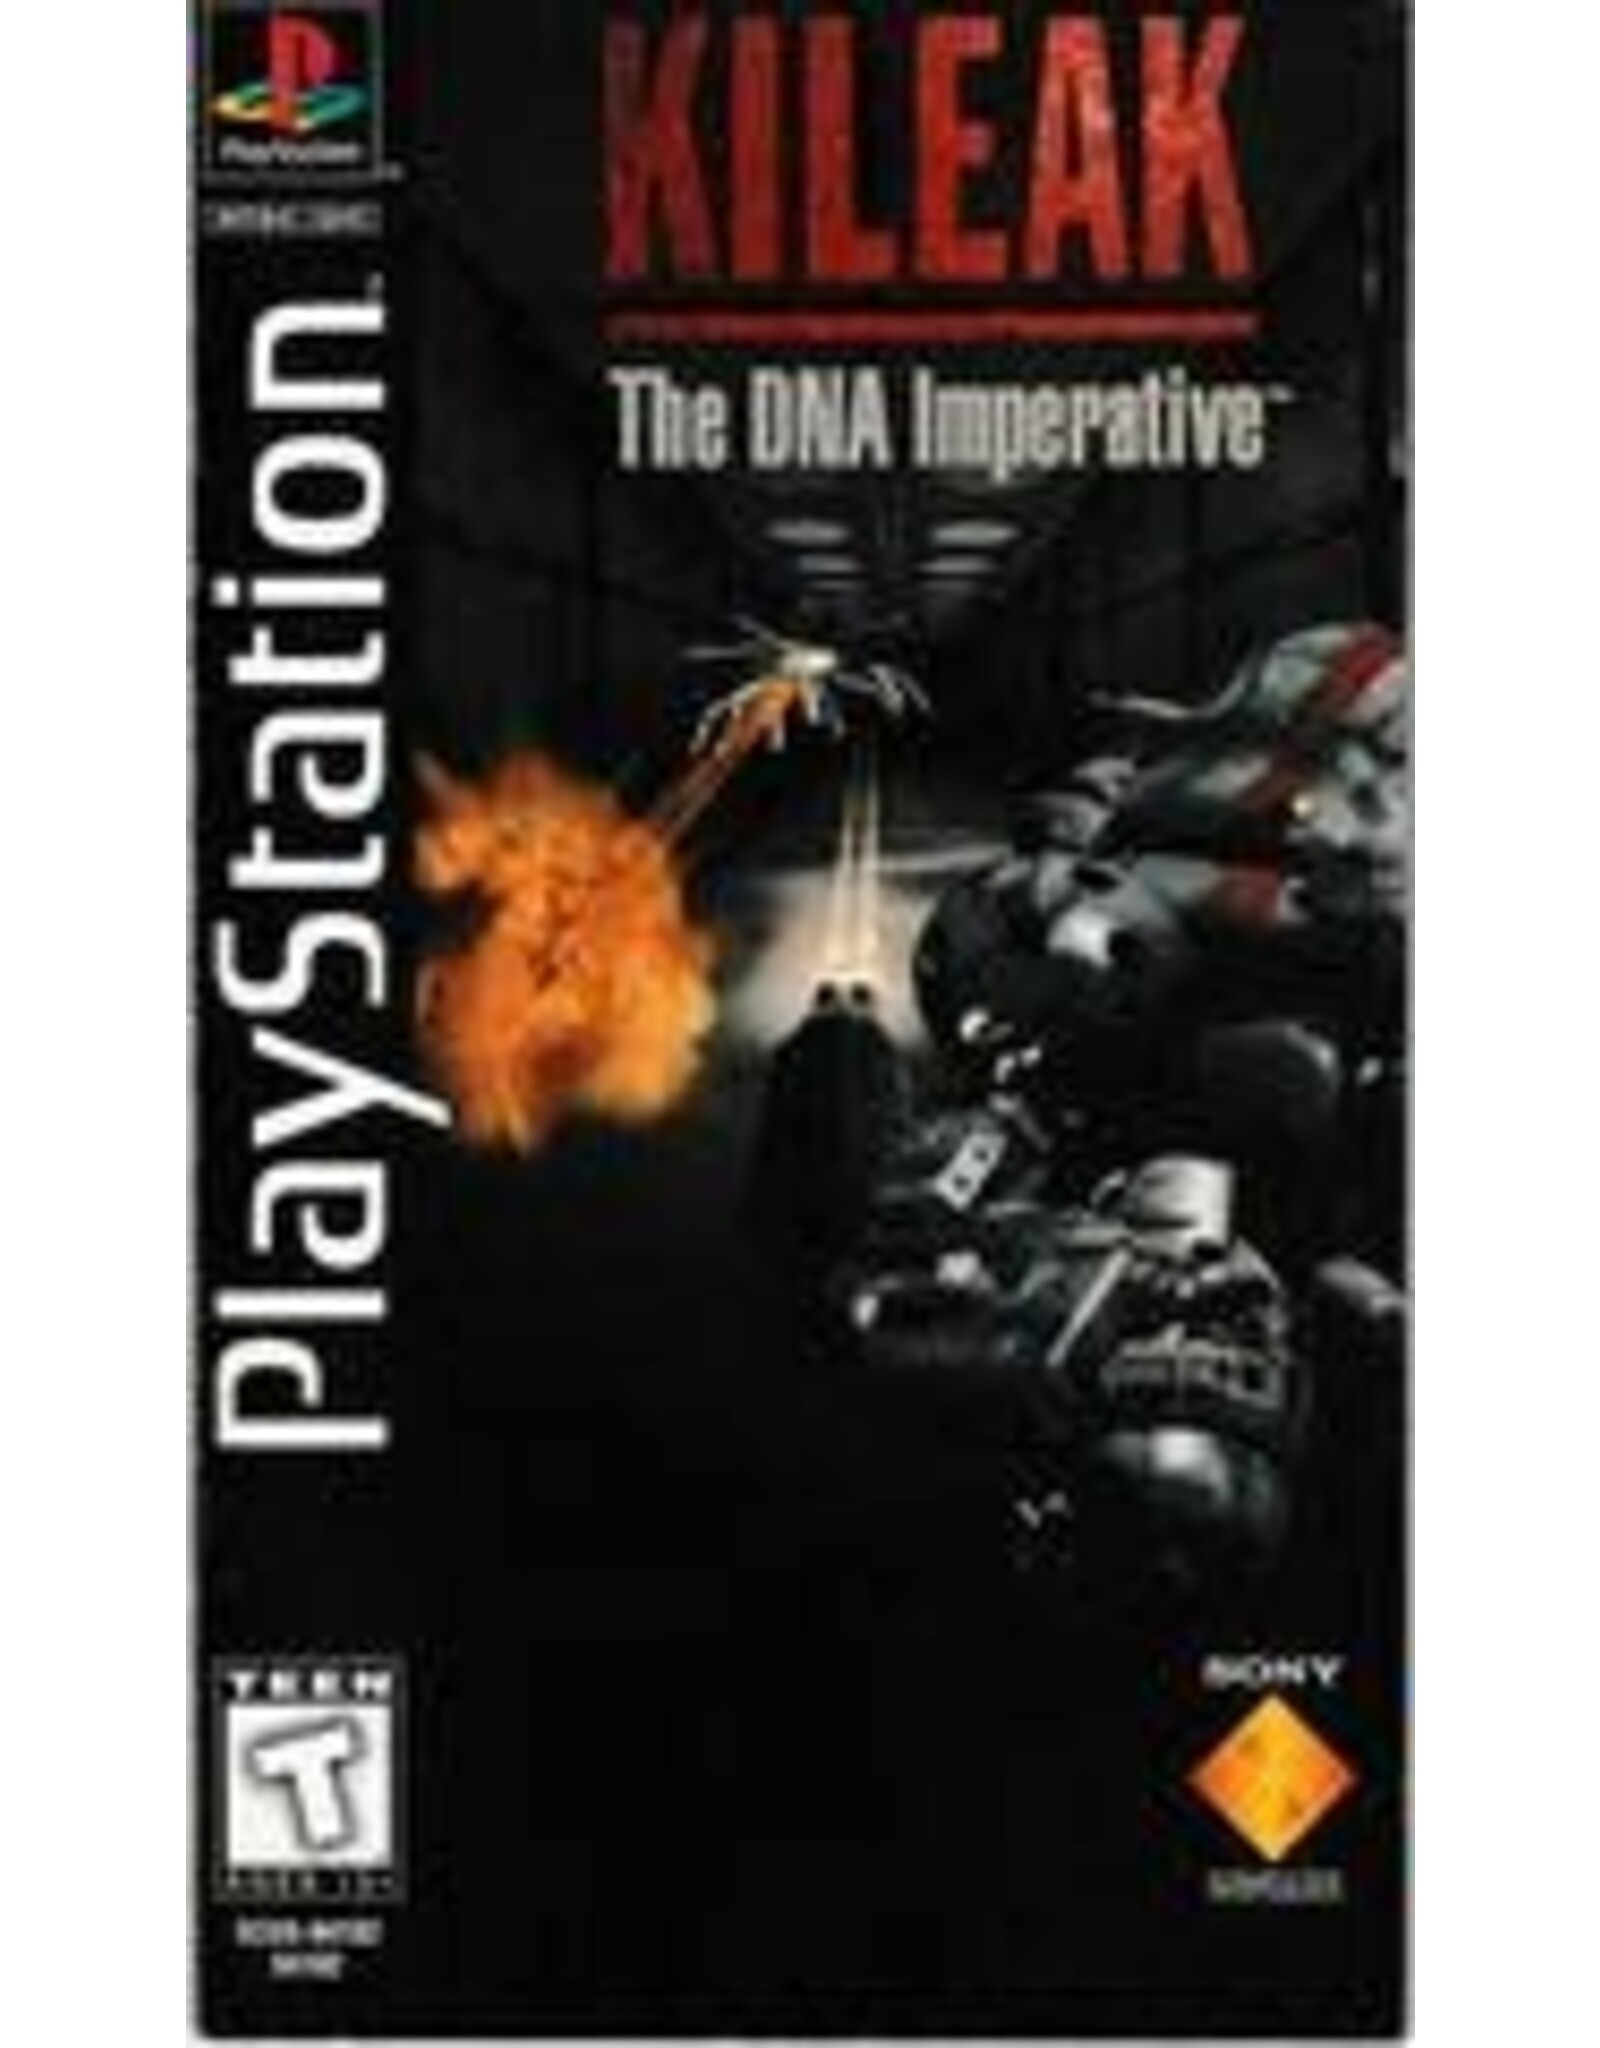 Playstation Kileak the DNA Imperative (CiB, Long Box) - Video Game Trader